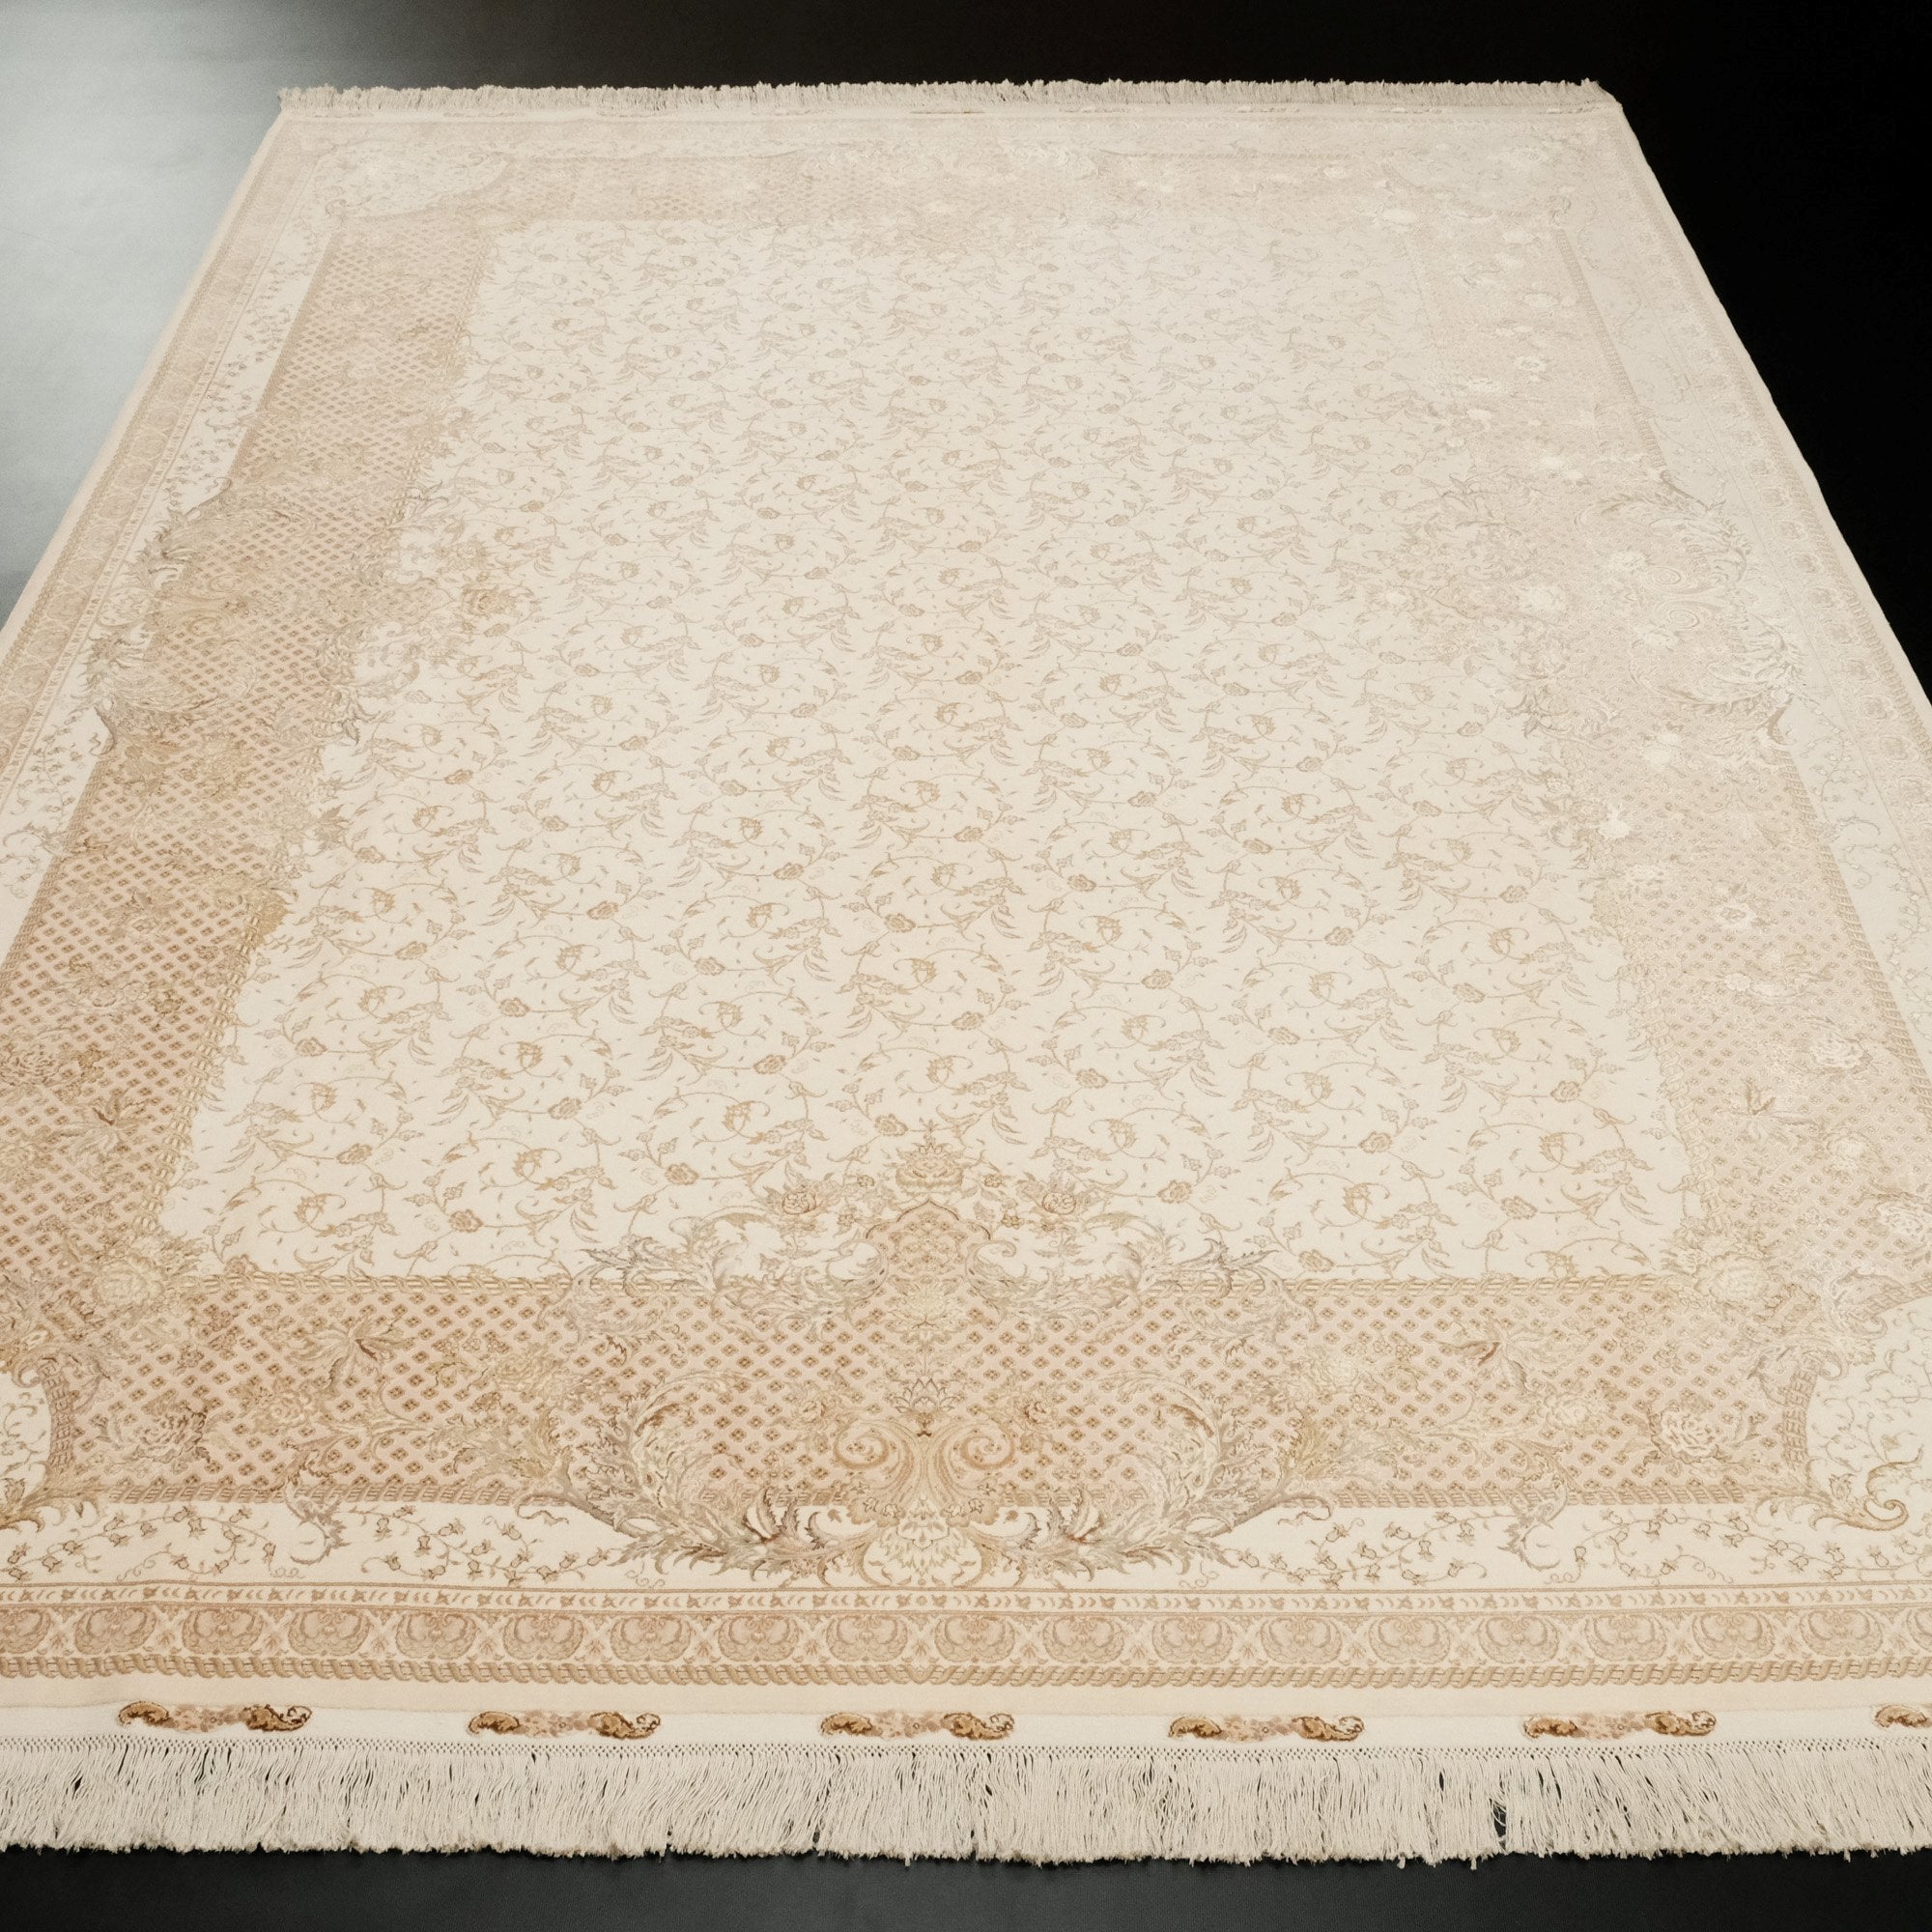 Zâde Series Floral Patterned Silk Hand-Woven Cream Carpet